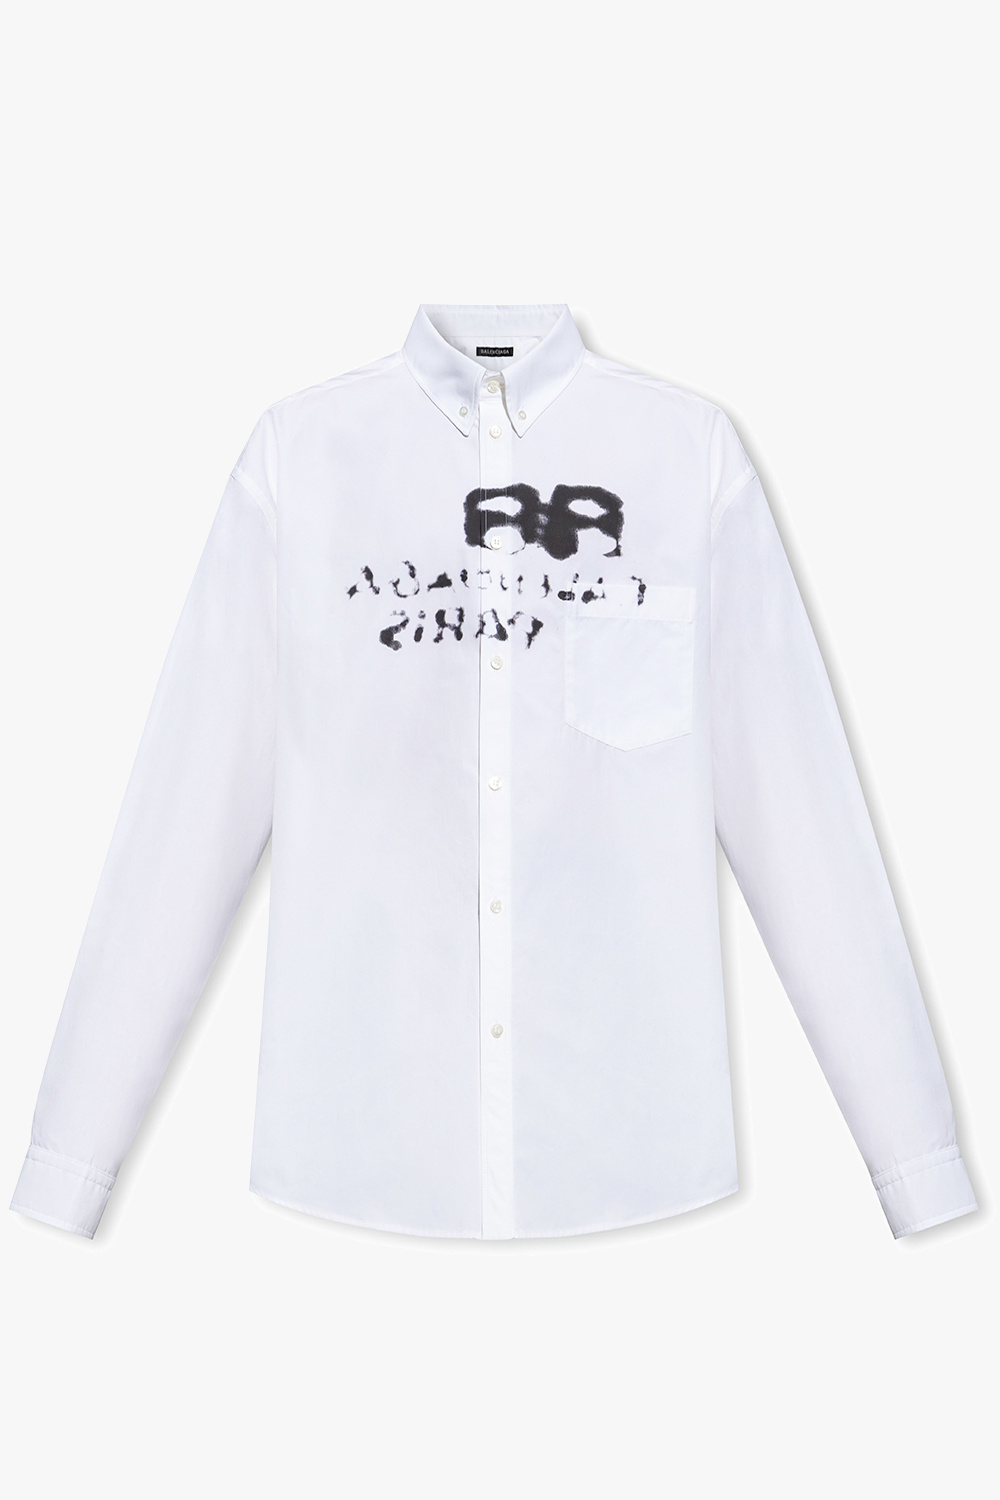 Balenciaga logo-print Short-sleeved T-Shirt - Neutrals